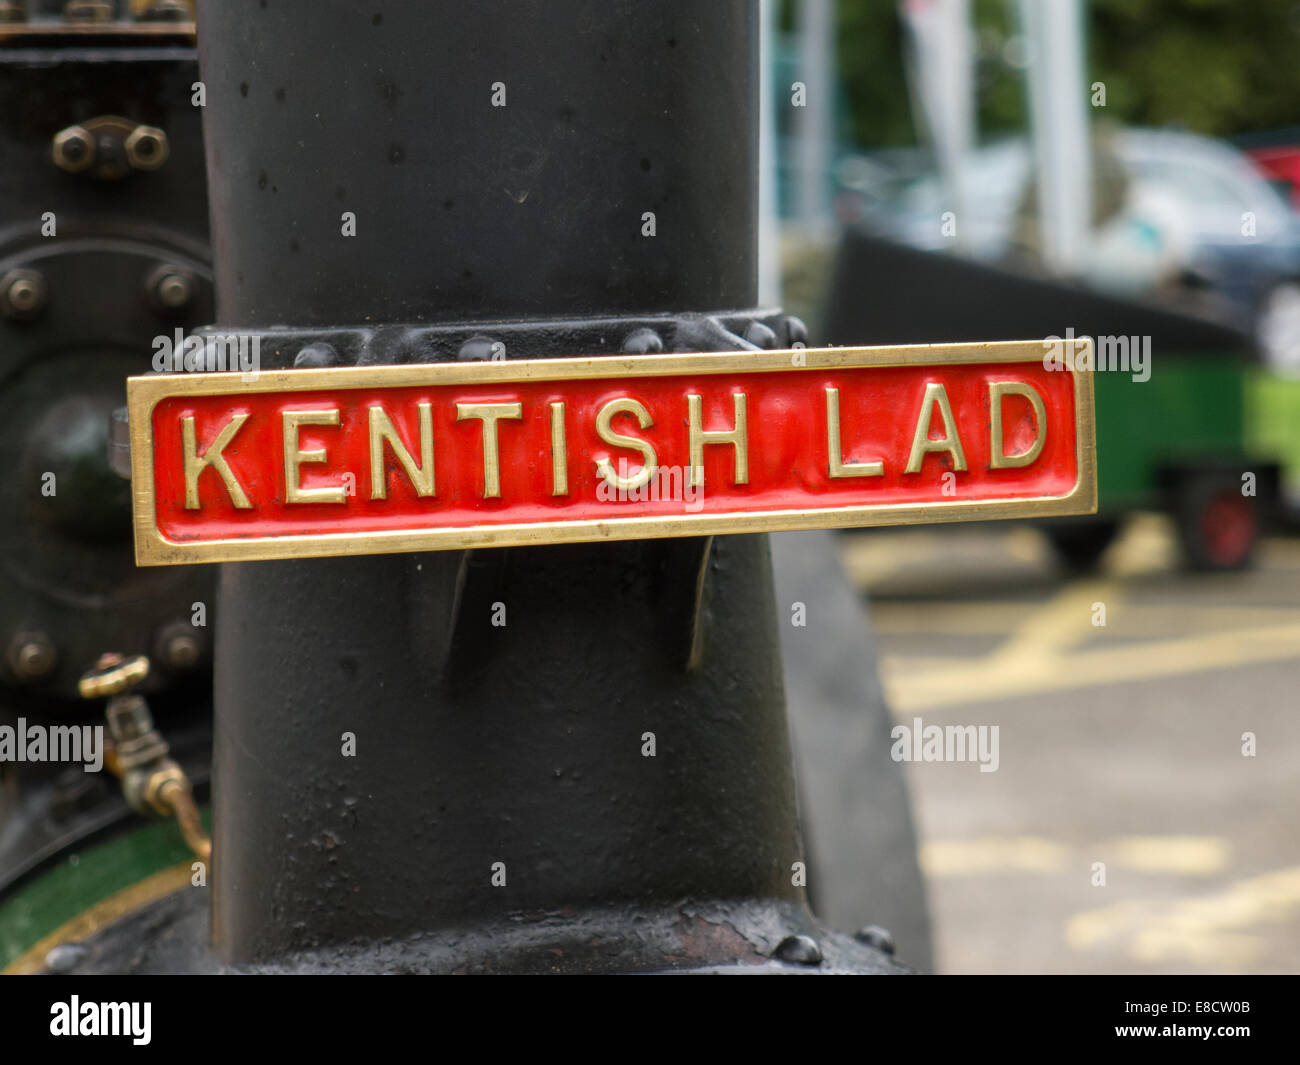 Kentish Lad steam traction engine Stock Photo